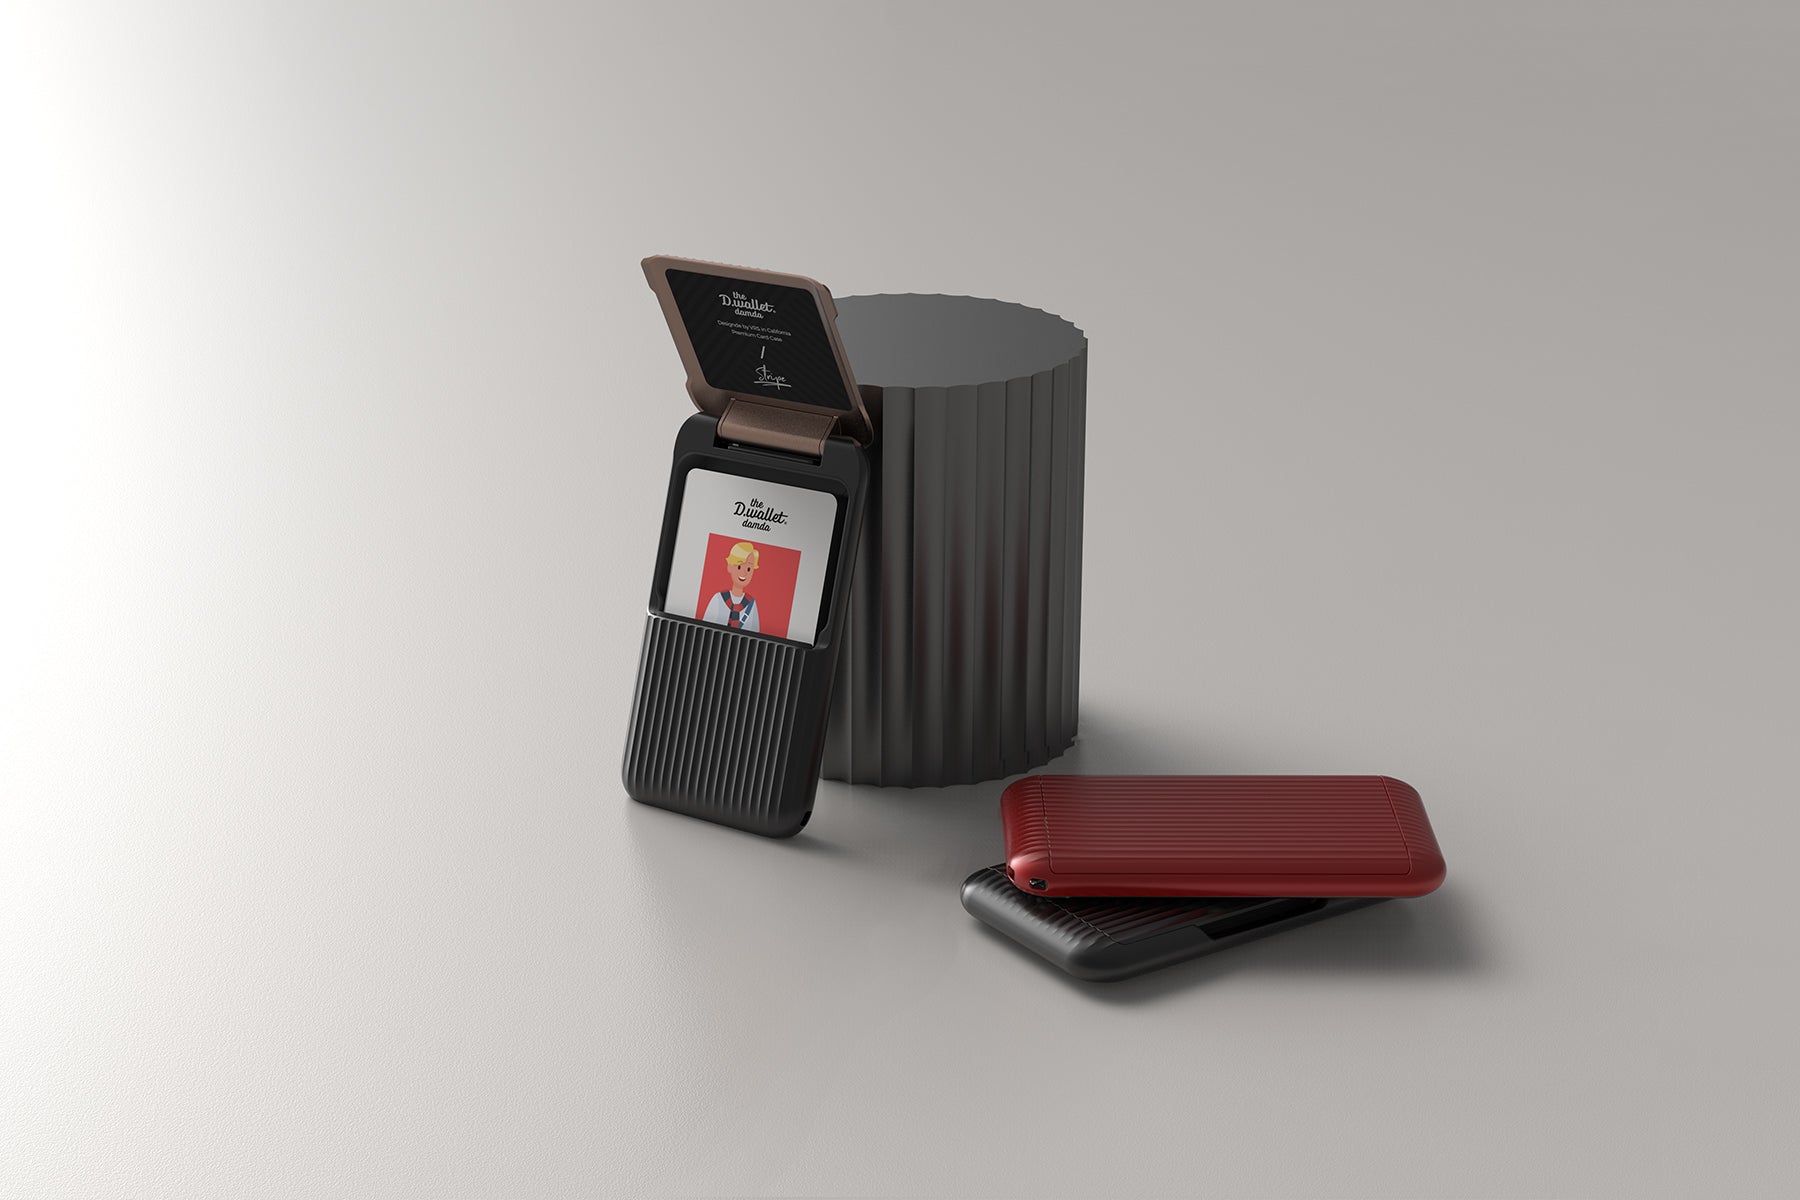 The Best Smart Wallet Series | VRS Design